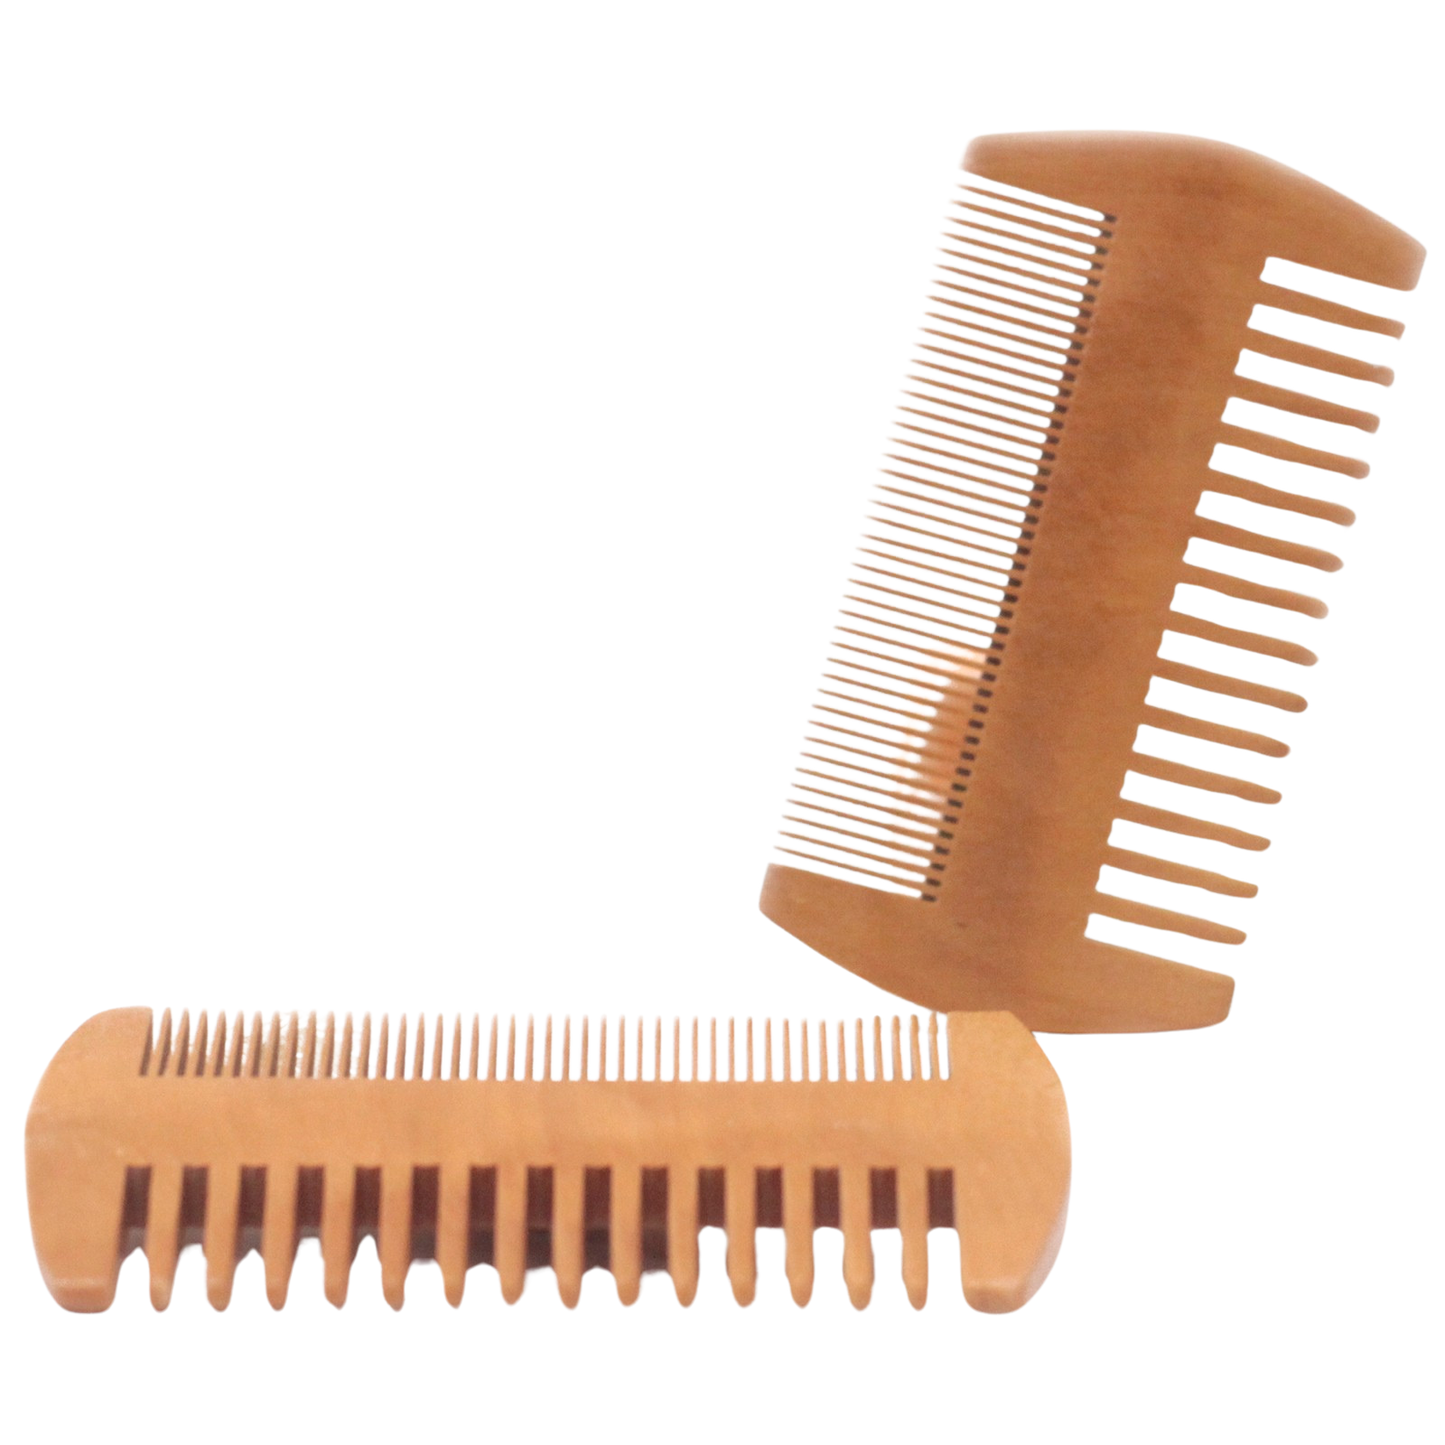 Irish wooden beard comb